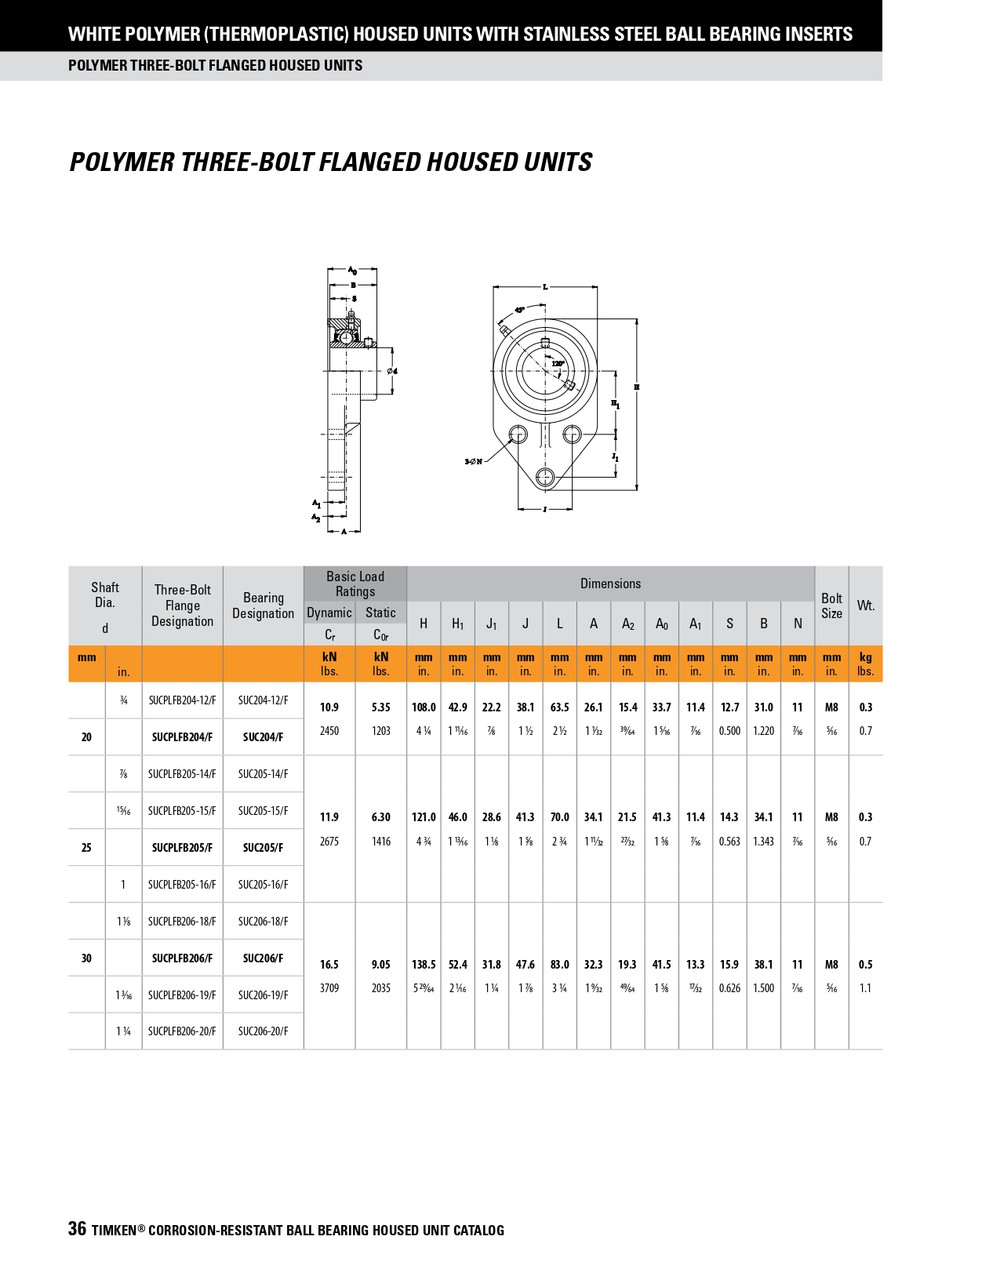 1" Polymer Set Screw Three-Bolt Flange Block Assembly   SUCPLFB205-16/F